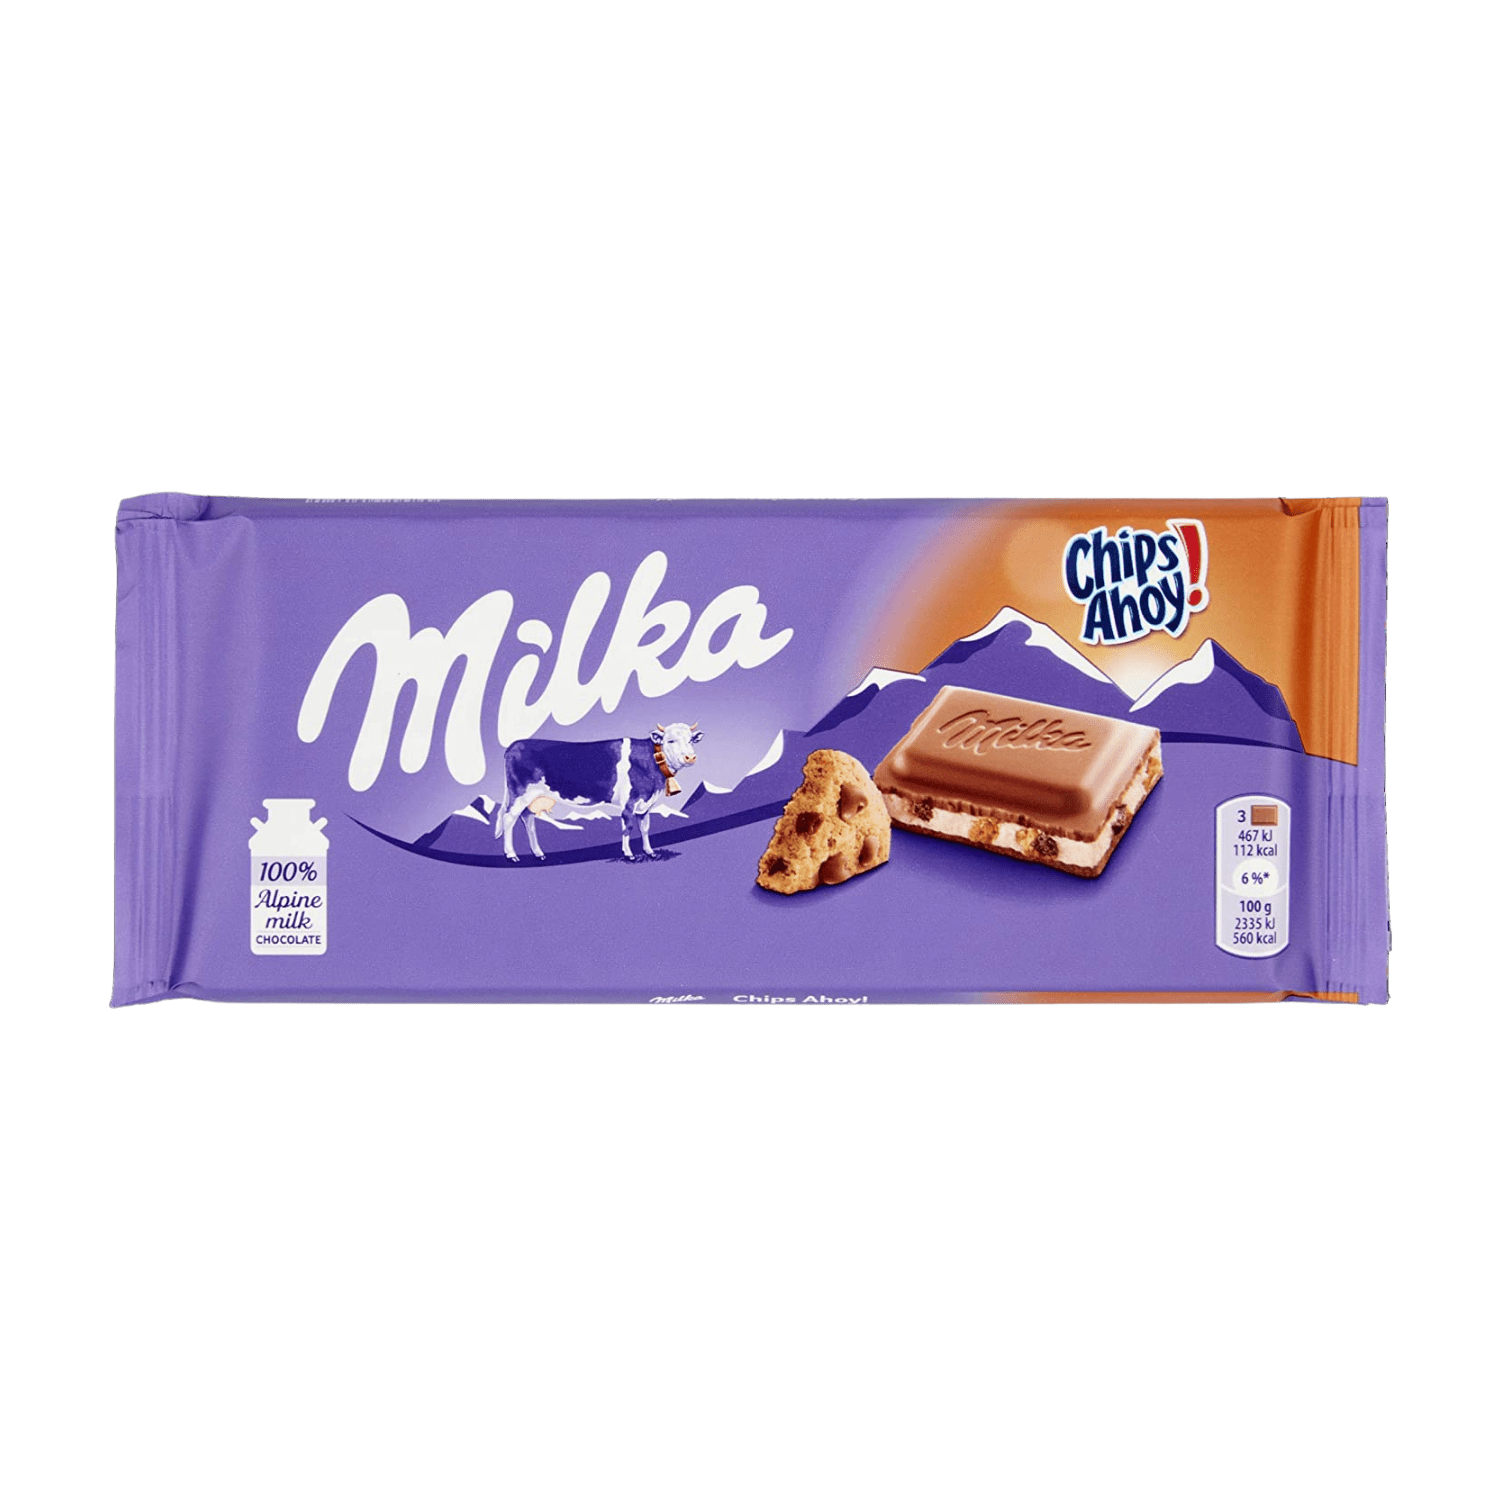 Milka Chips Ahoy Chocolate Bar